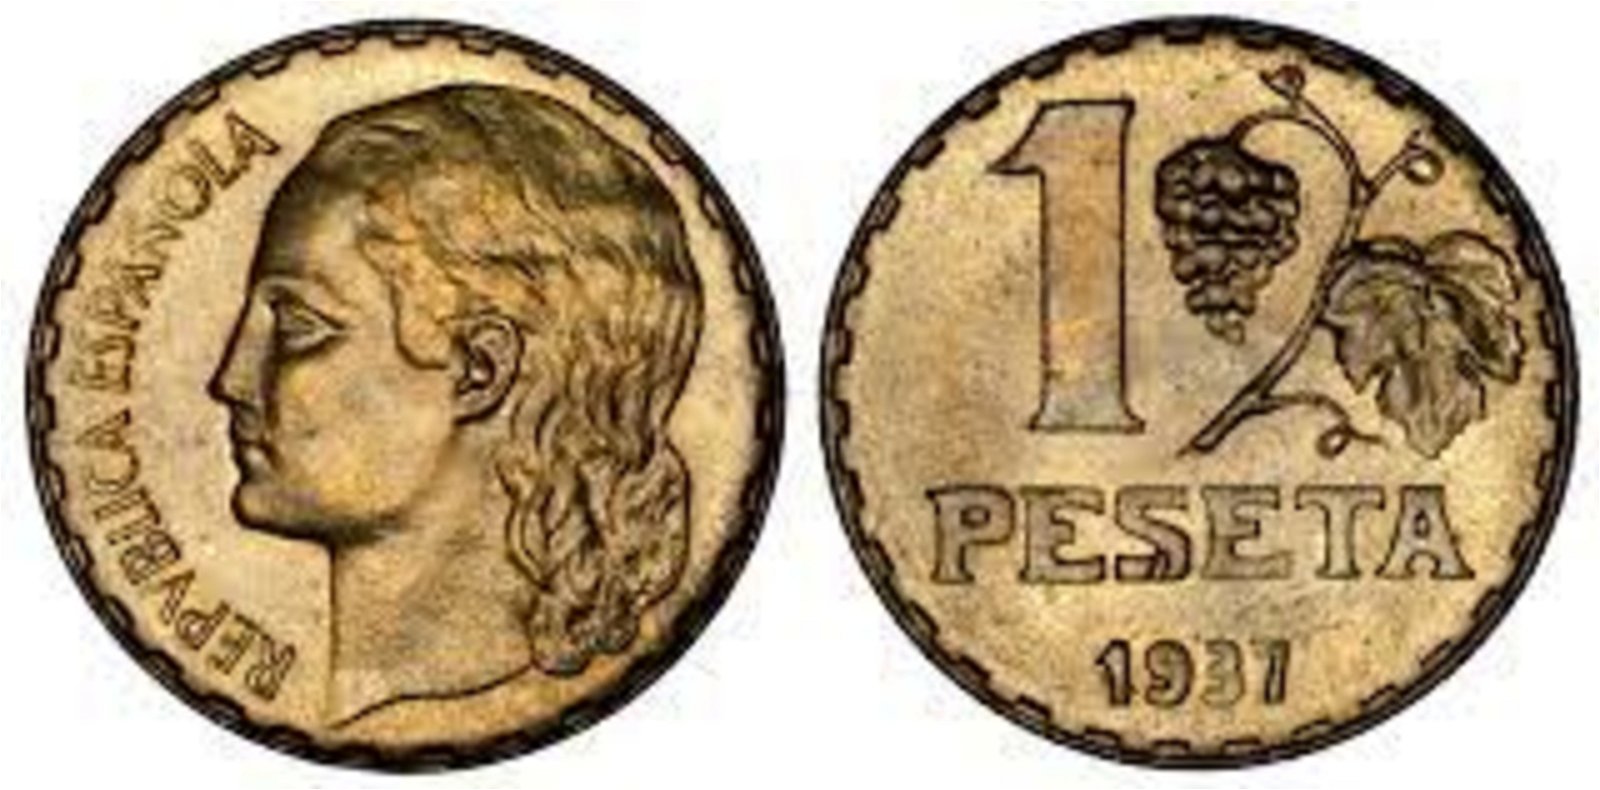 Las 5 monedas de peseta más valiosas de la historia 3